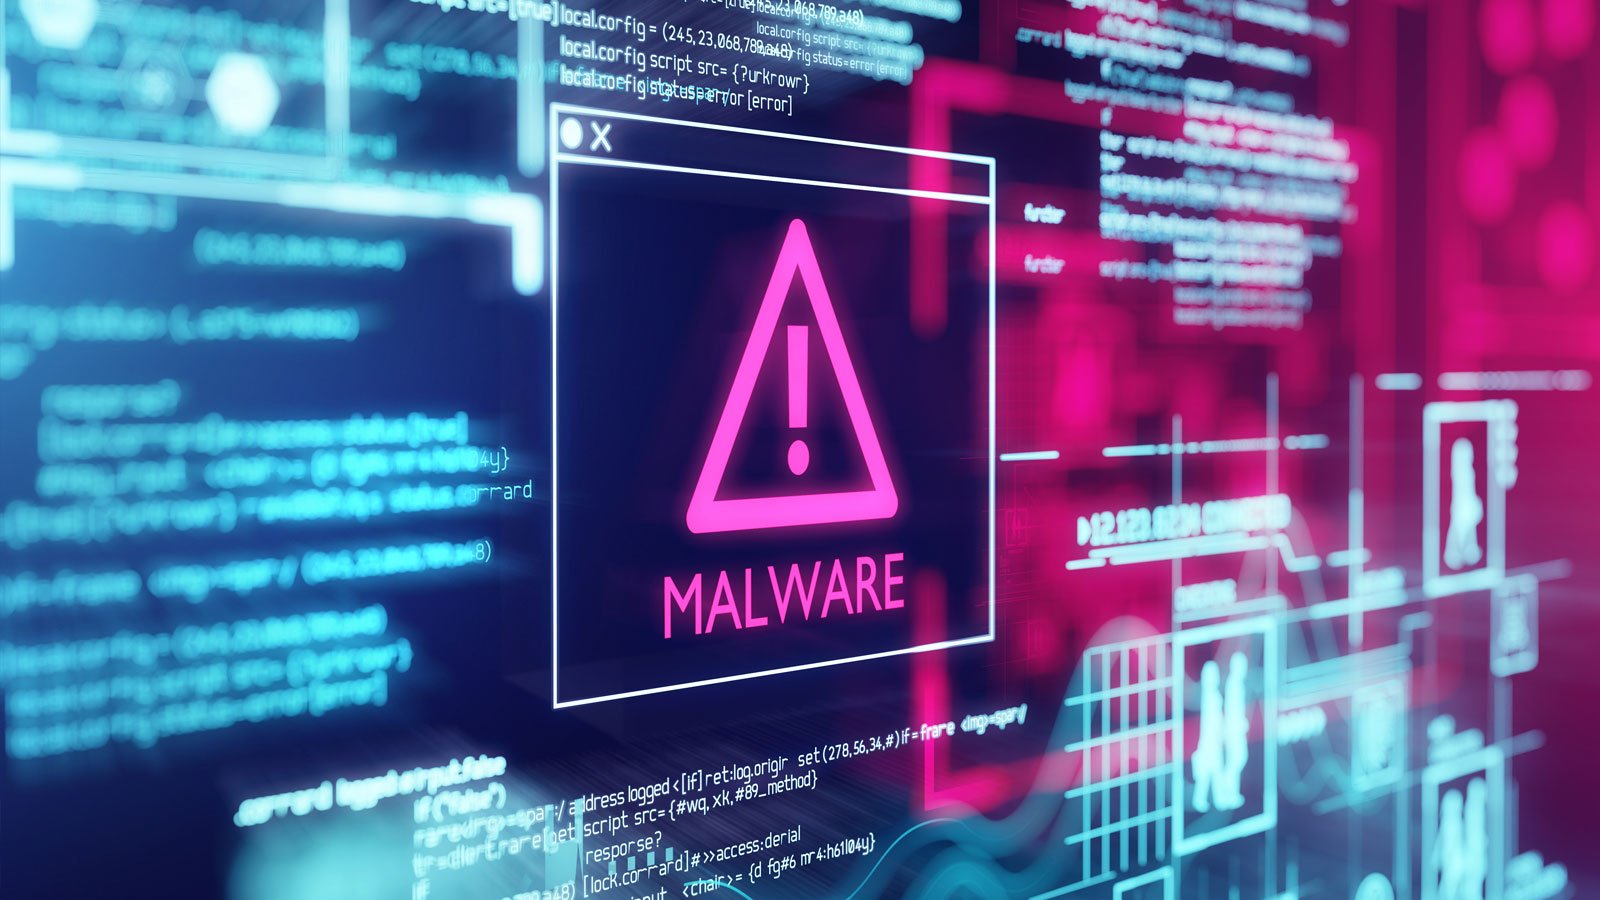 Fraudulent malware warning on computer